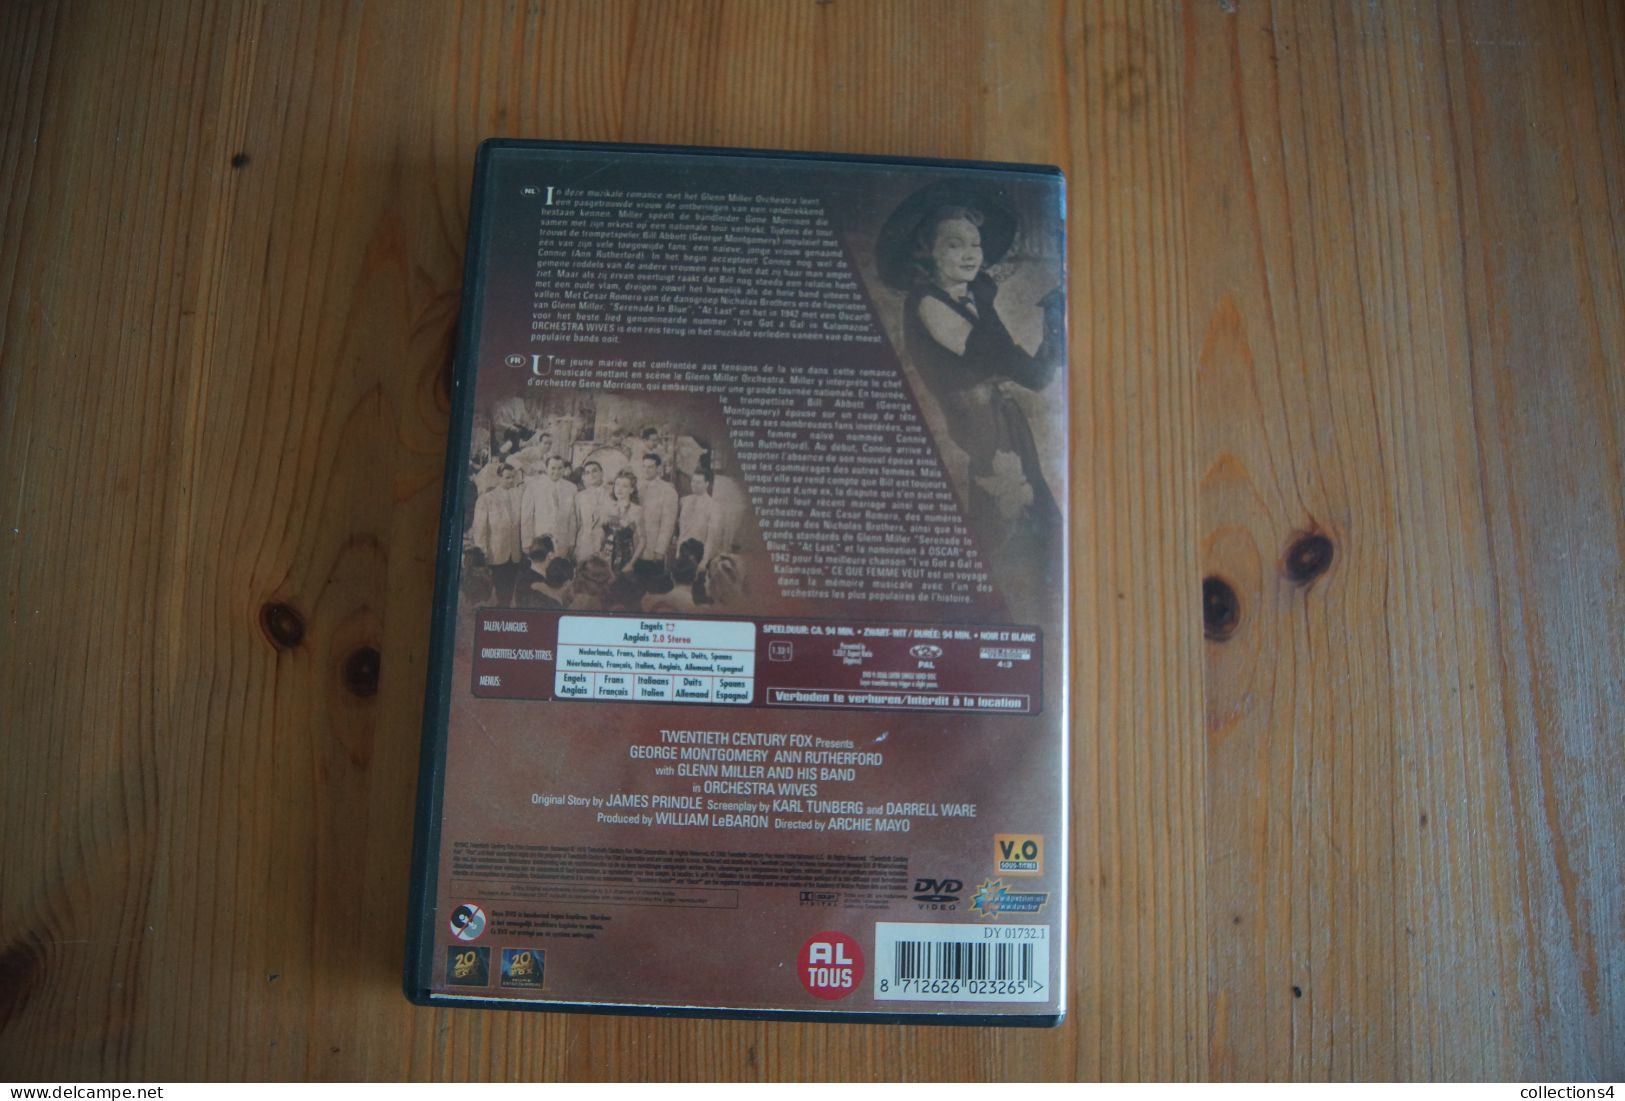 ORCHESTRA WIVES DVD DU FILM DE 1942 GLENN MILLER GEORGE MONTGOMERY ANN RUTHFORD BO TRES JAZZ - Muziek DVD's